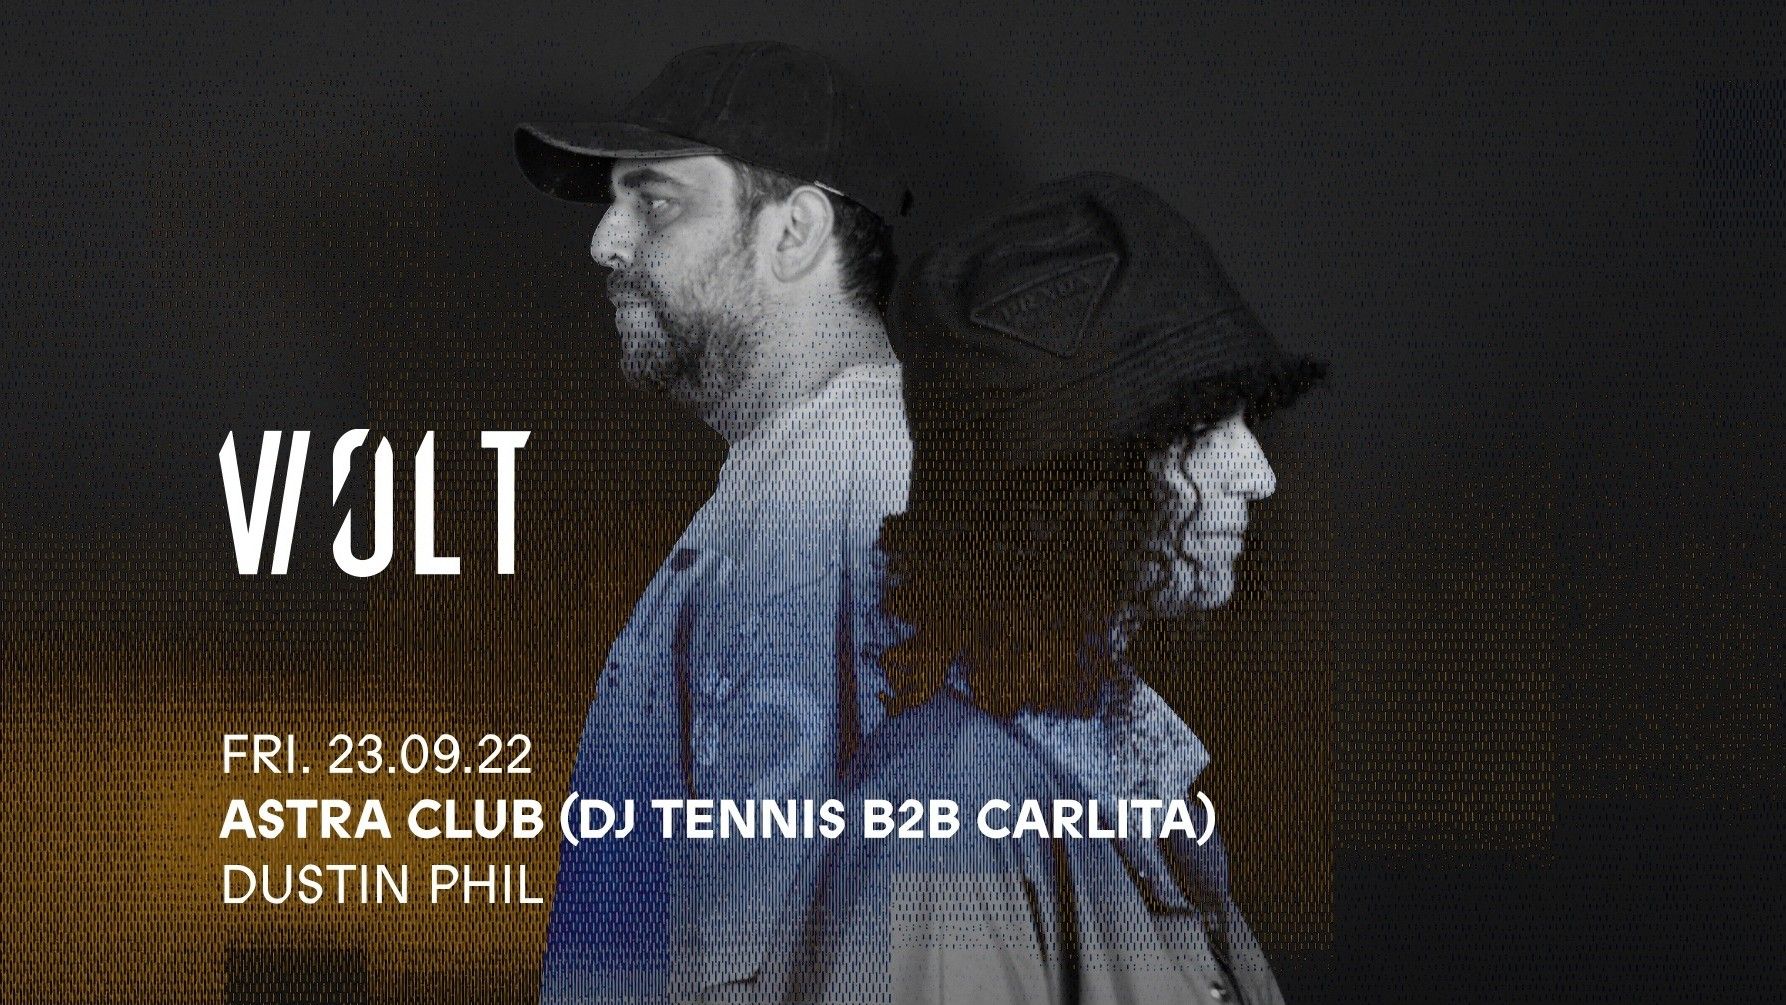 Astra Club (Dj Tennis B2B Carlita) + Dustin Phil